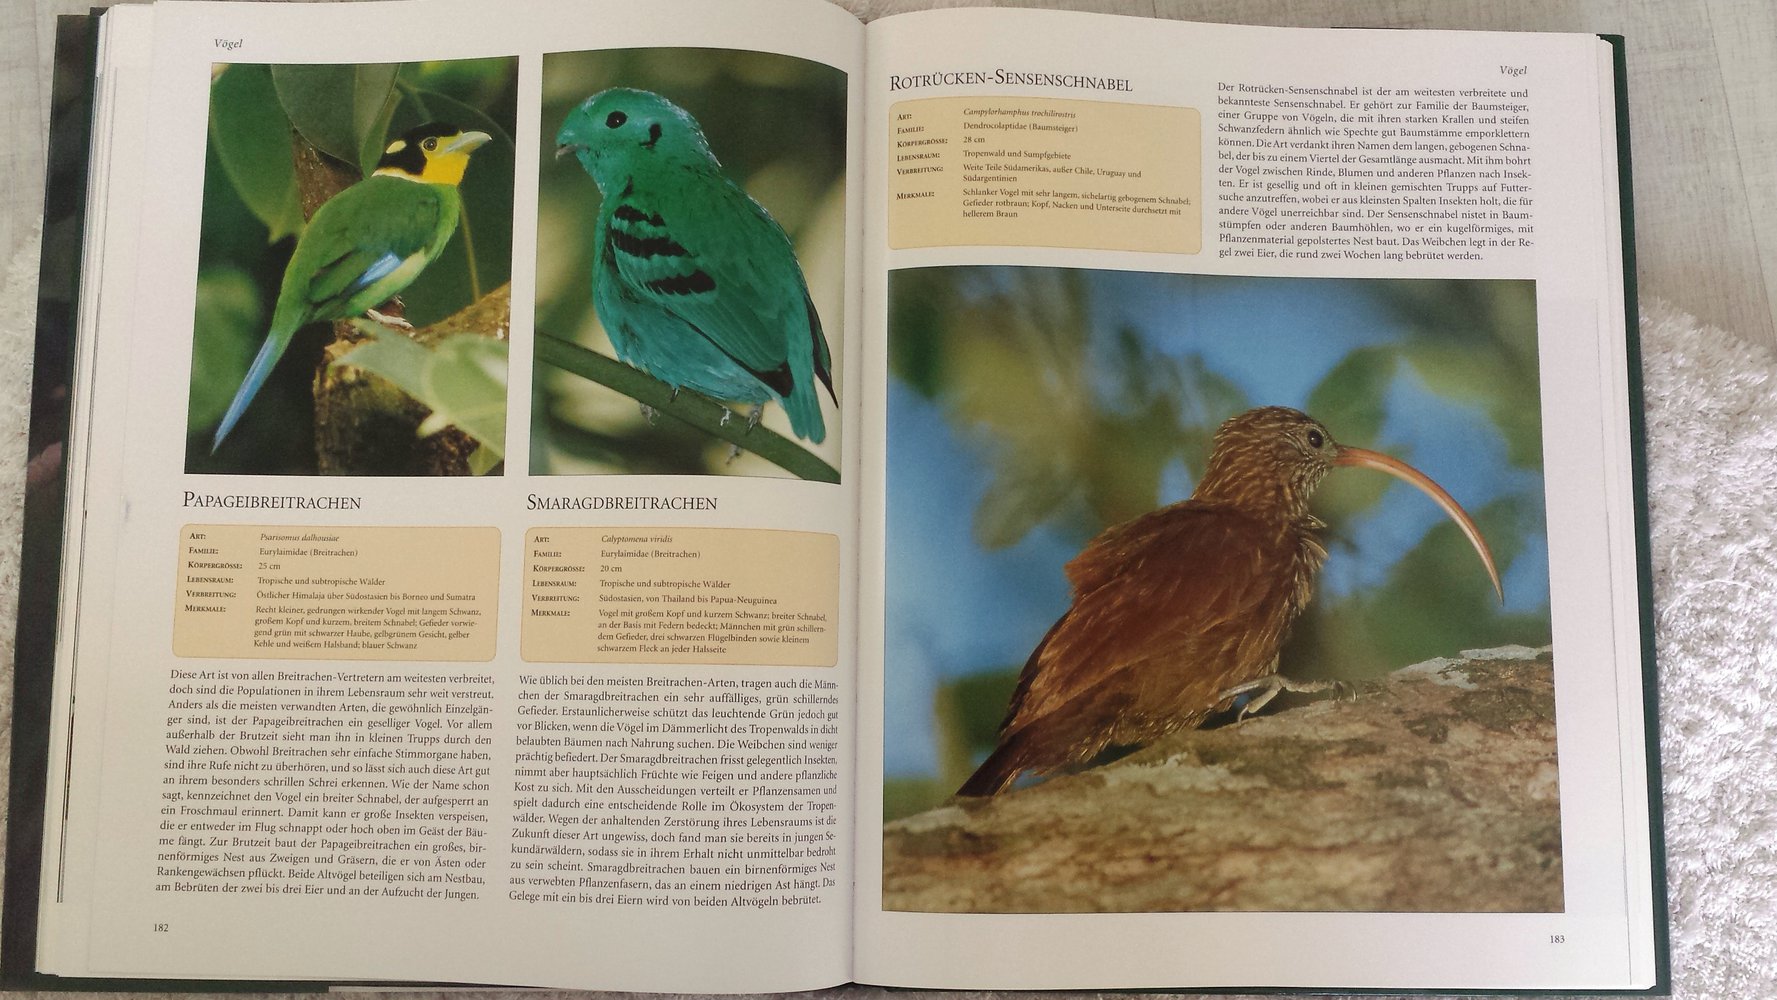 Vögel - Über 4000 Arten aus aller Welt